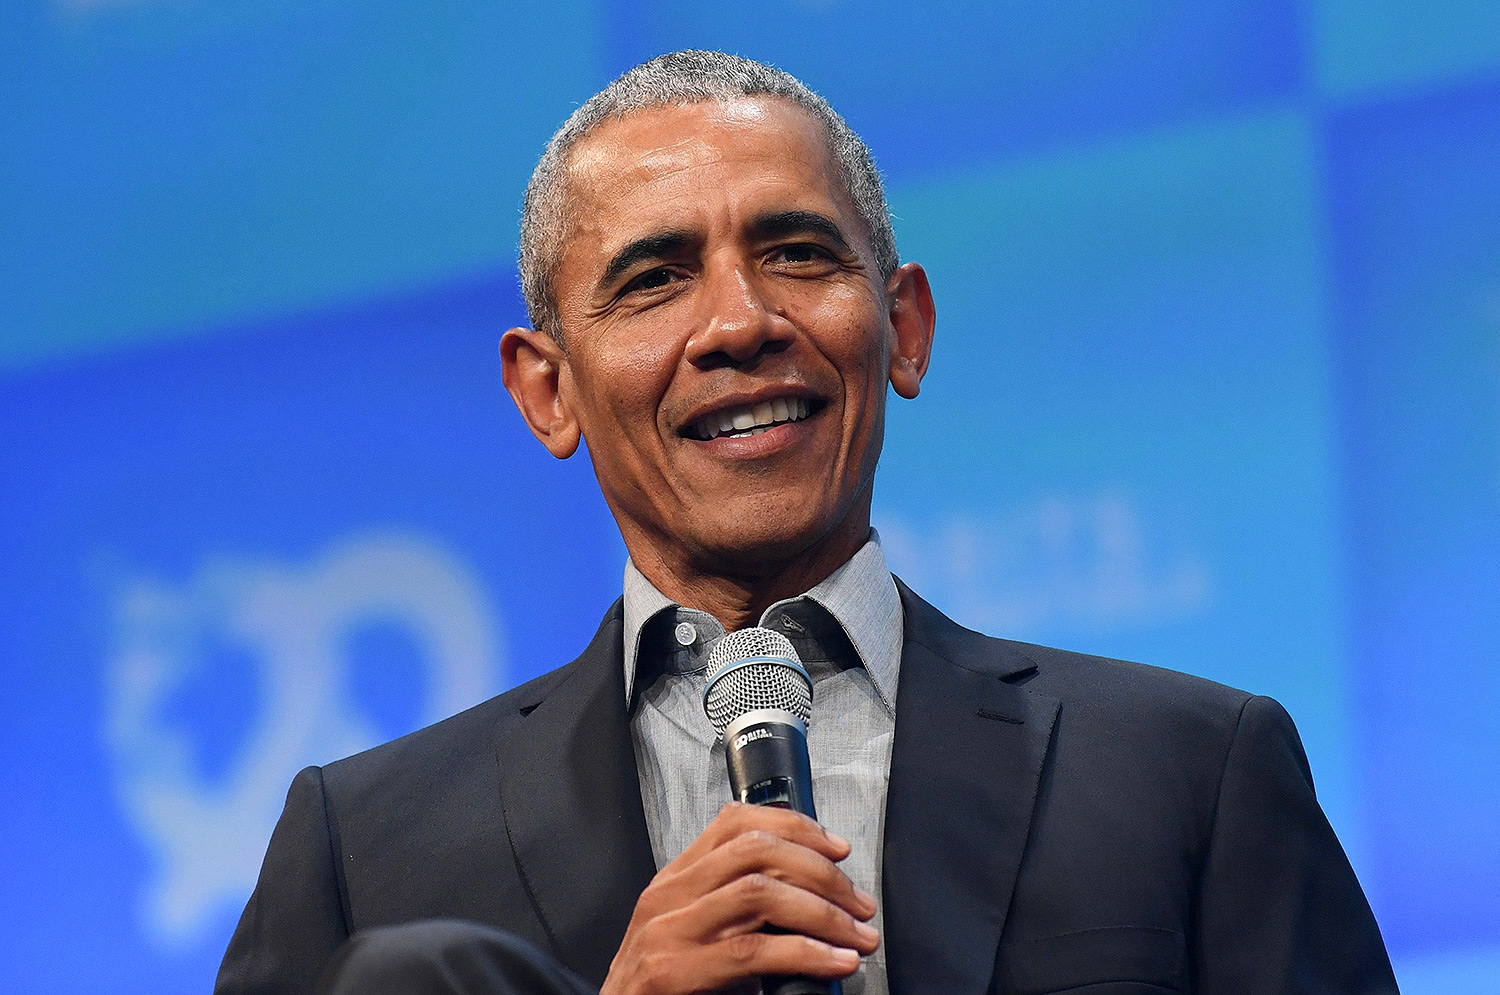 Barack Obama anuncia su apoyo a Biden